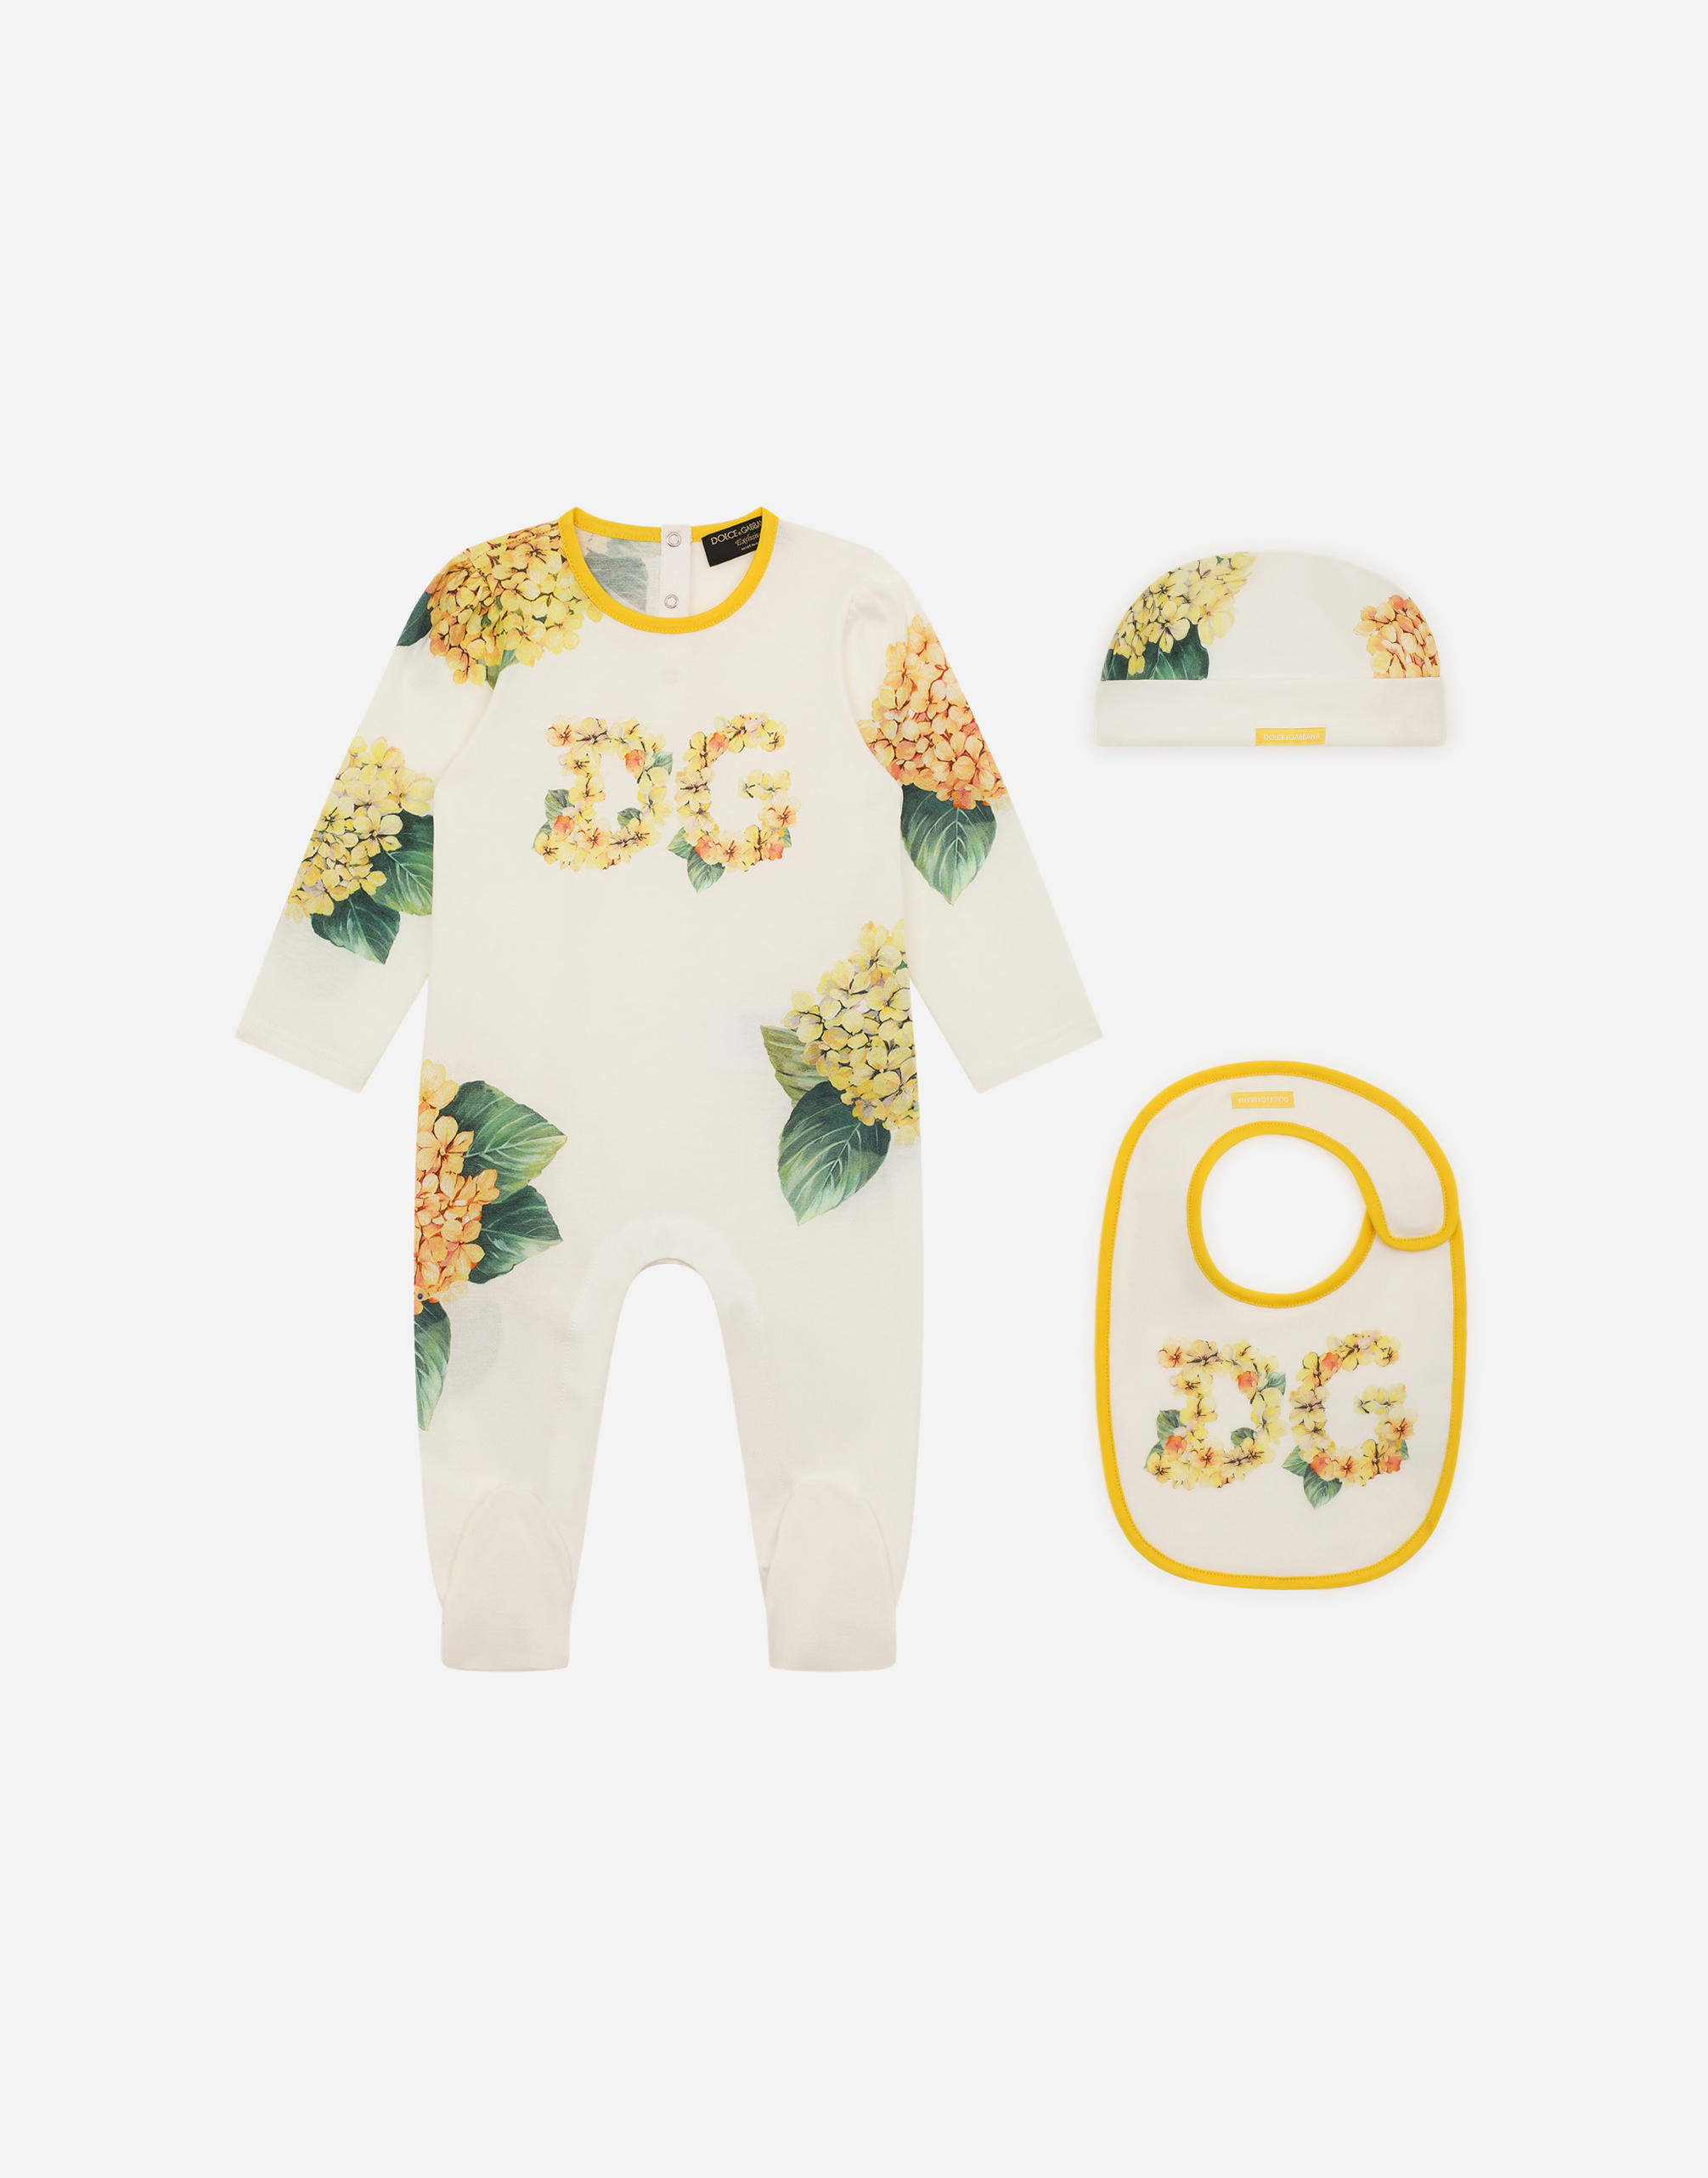 Dolce & Gabbana Babies' 3-piece Gift Set With Hydrangea Print